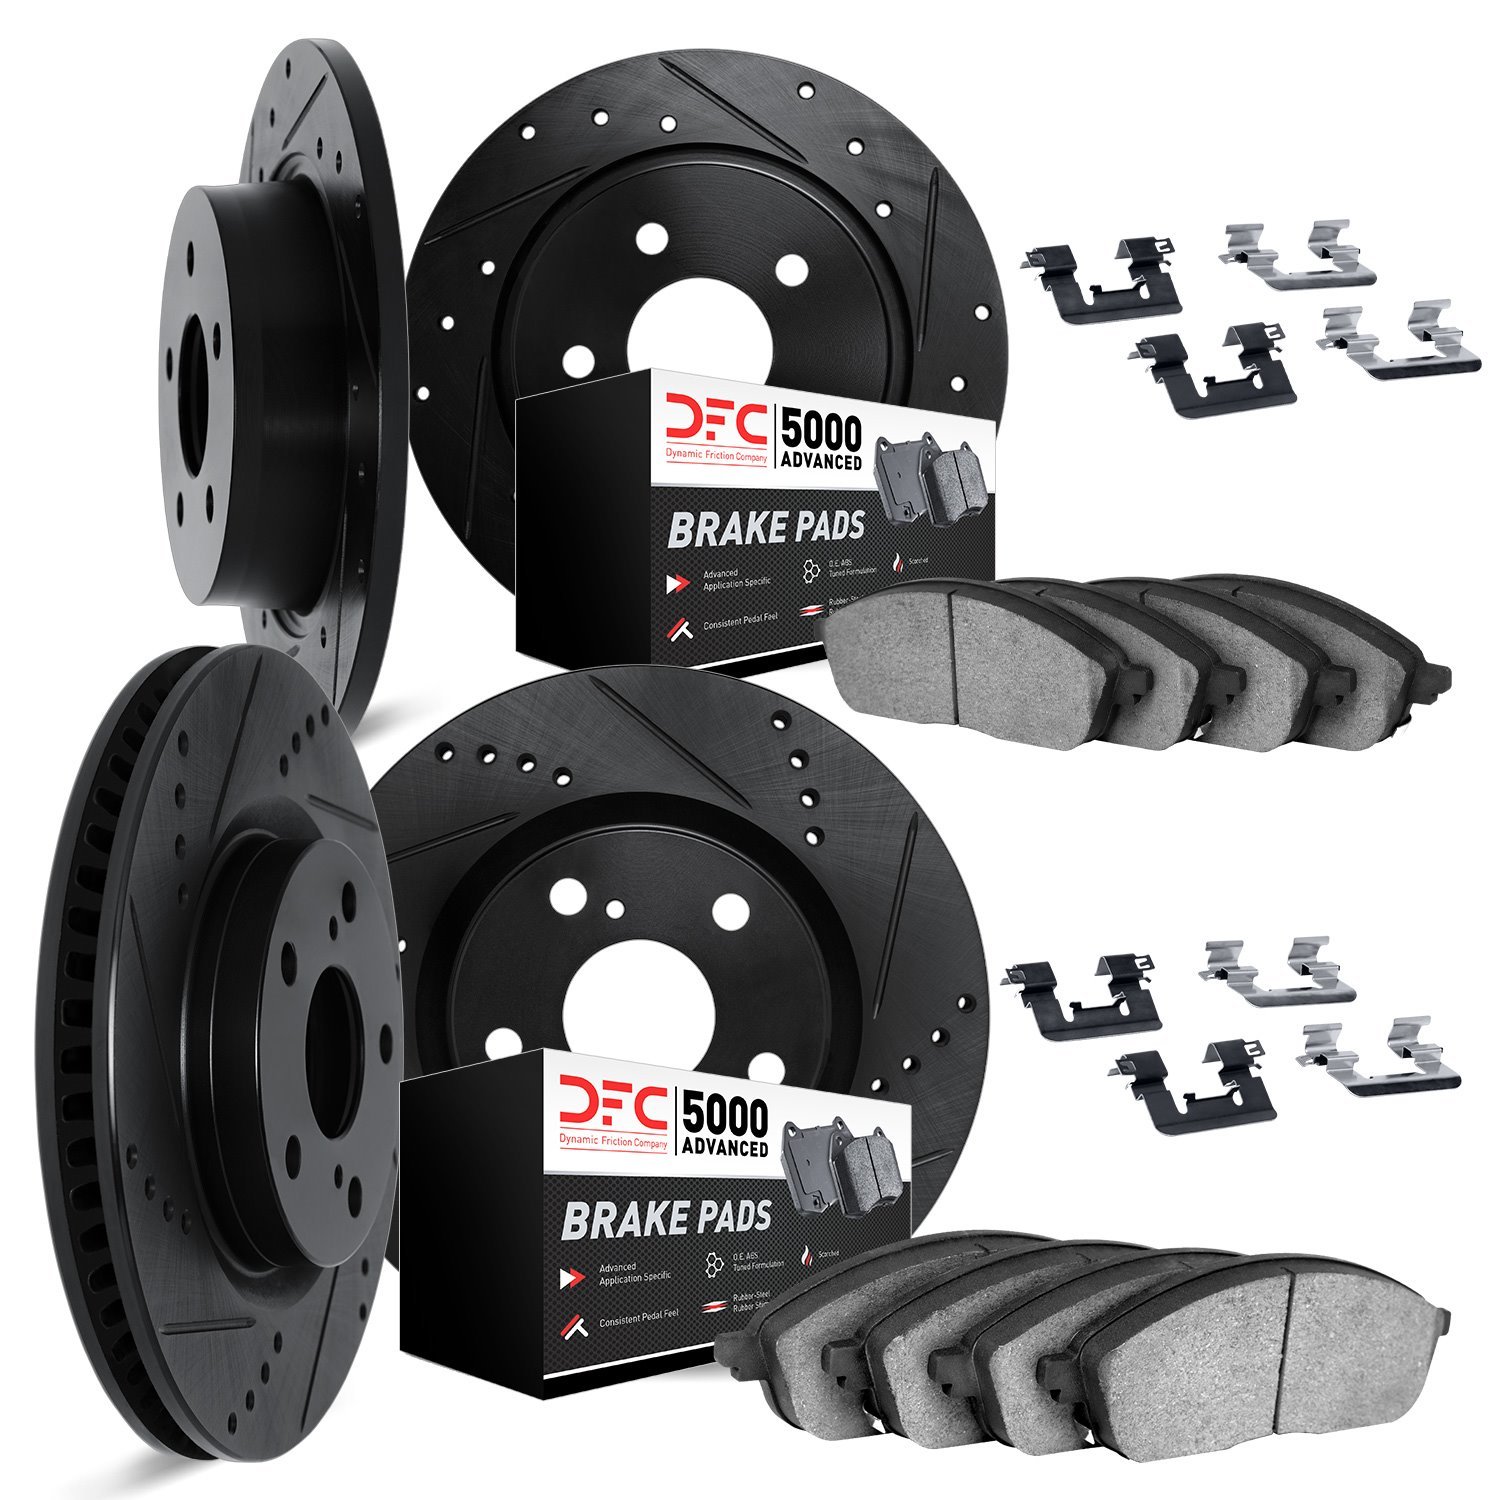 8514-40243 Drilled/Slotted Brake Rotors w/5000 Advanced Brake Pads Kit & Hardware [Black], 2002-2006 Multiple Makes/Models, Posi